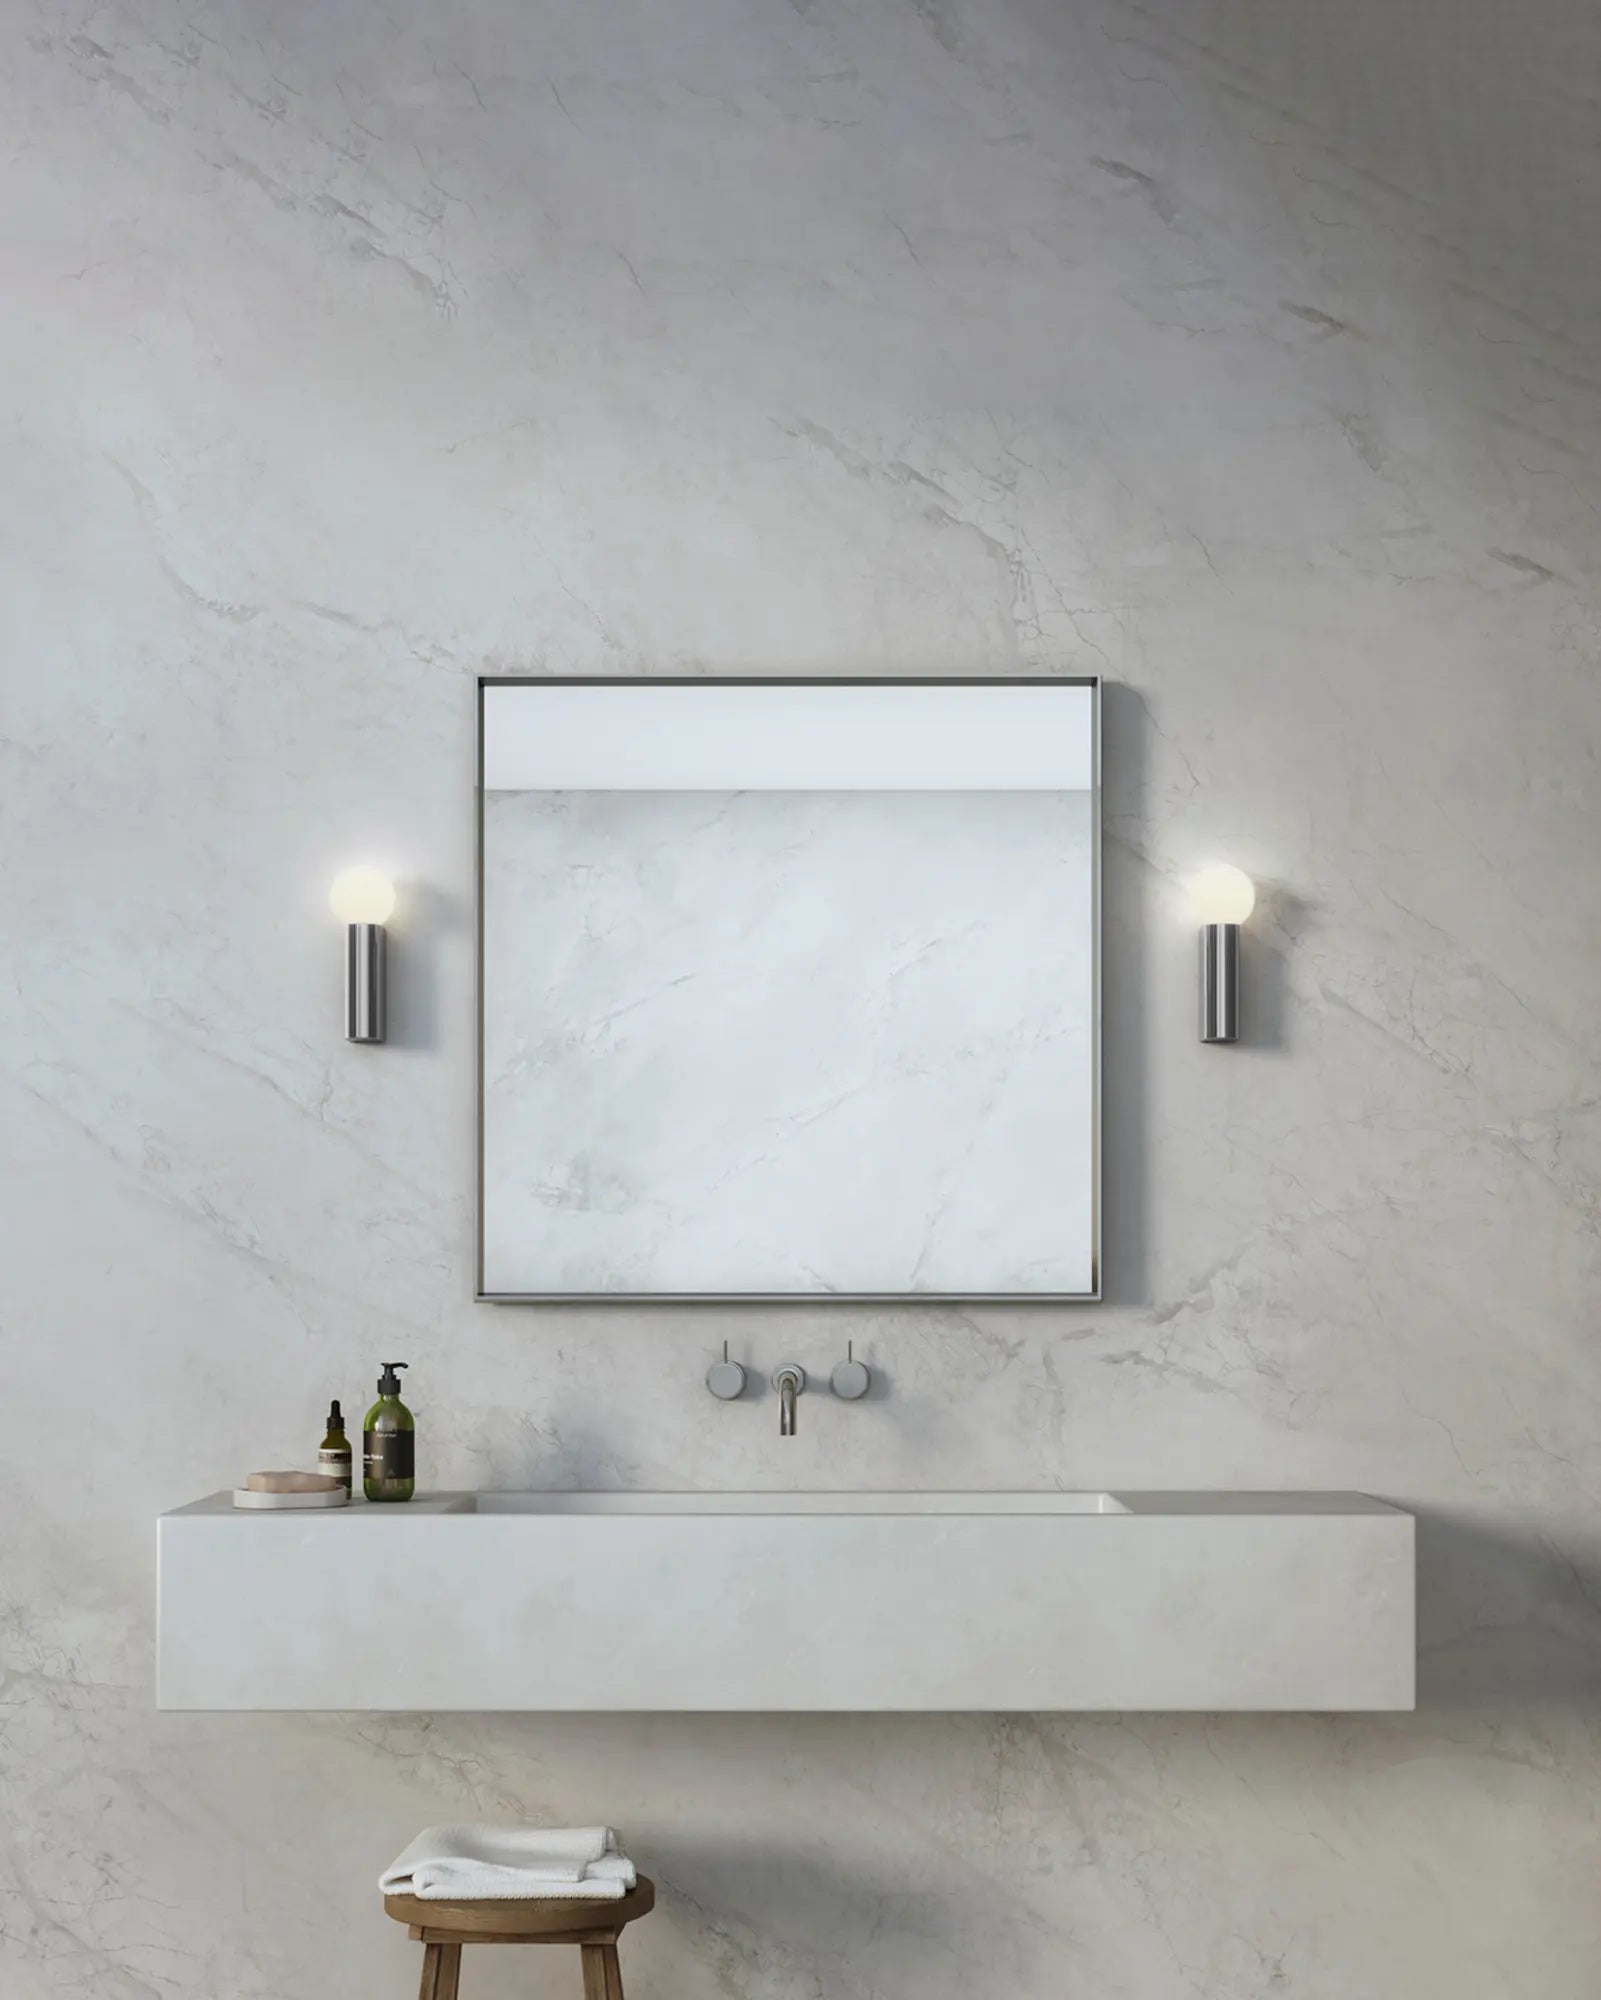 Ortona Single Wall Light in chrome bathroom mirror's sides